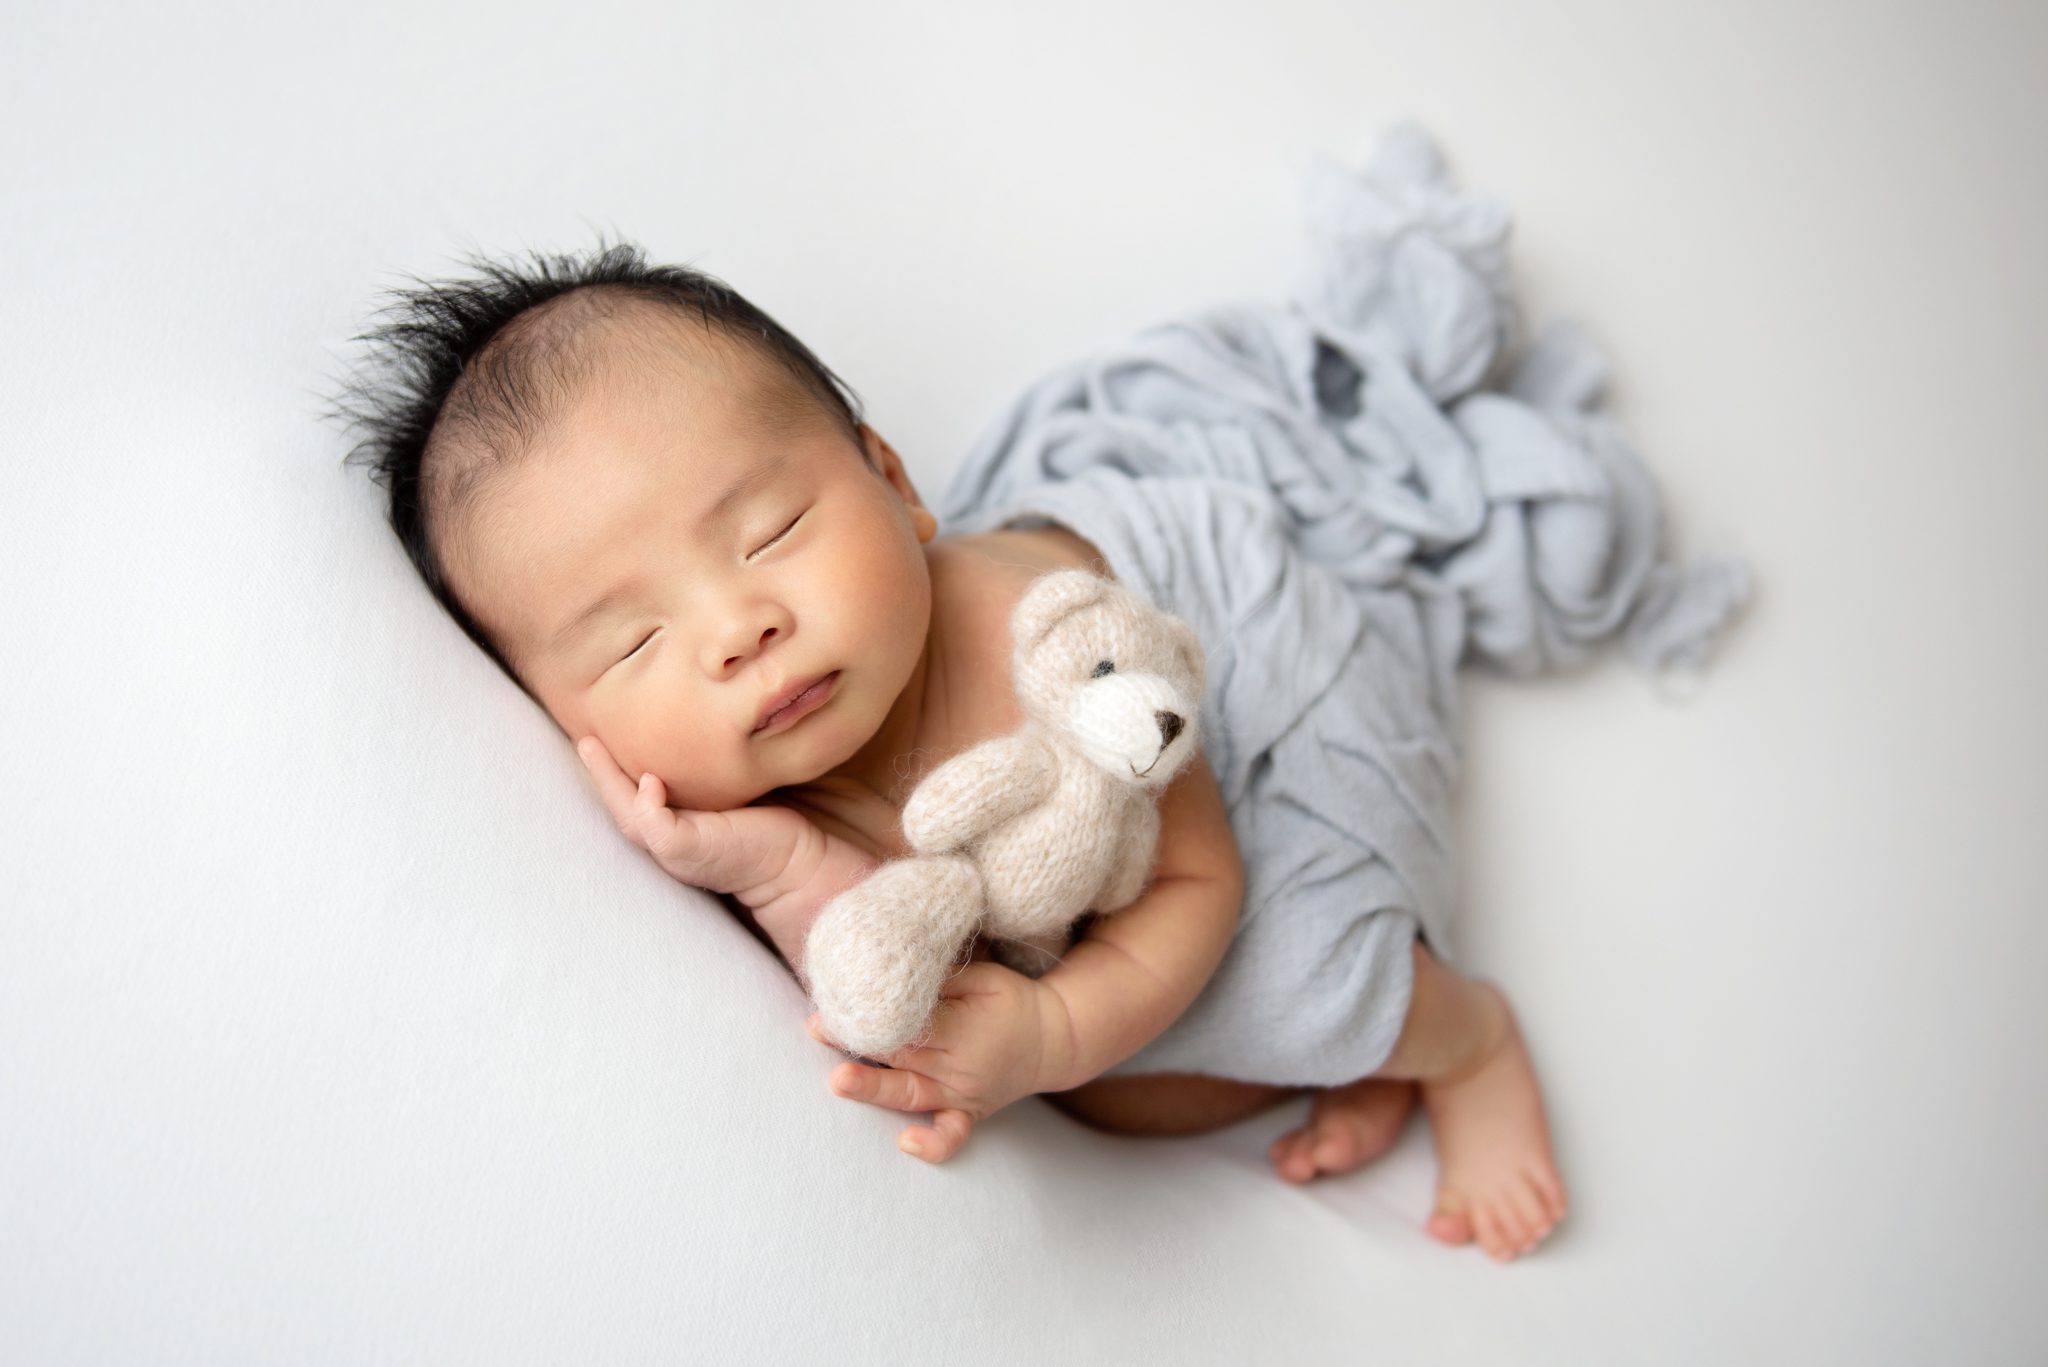 newborn baby boy holding a stuffy